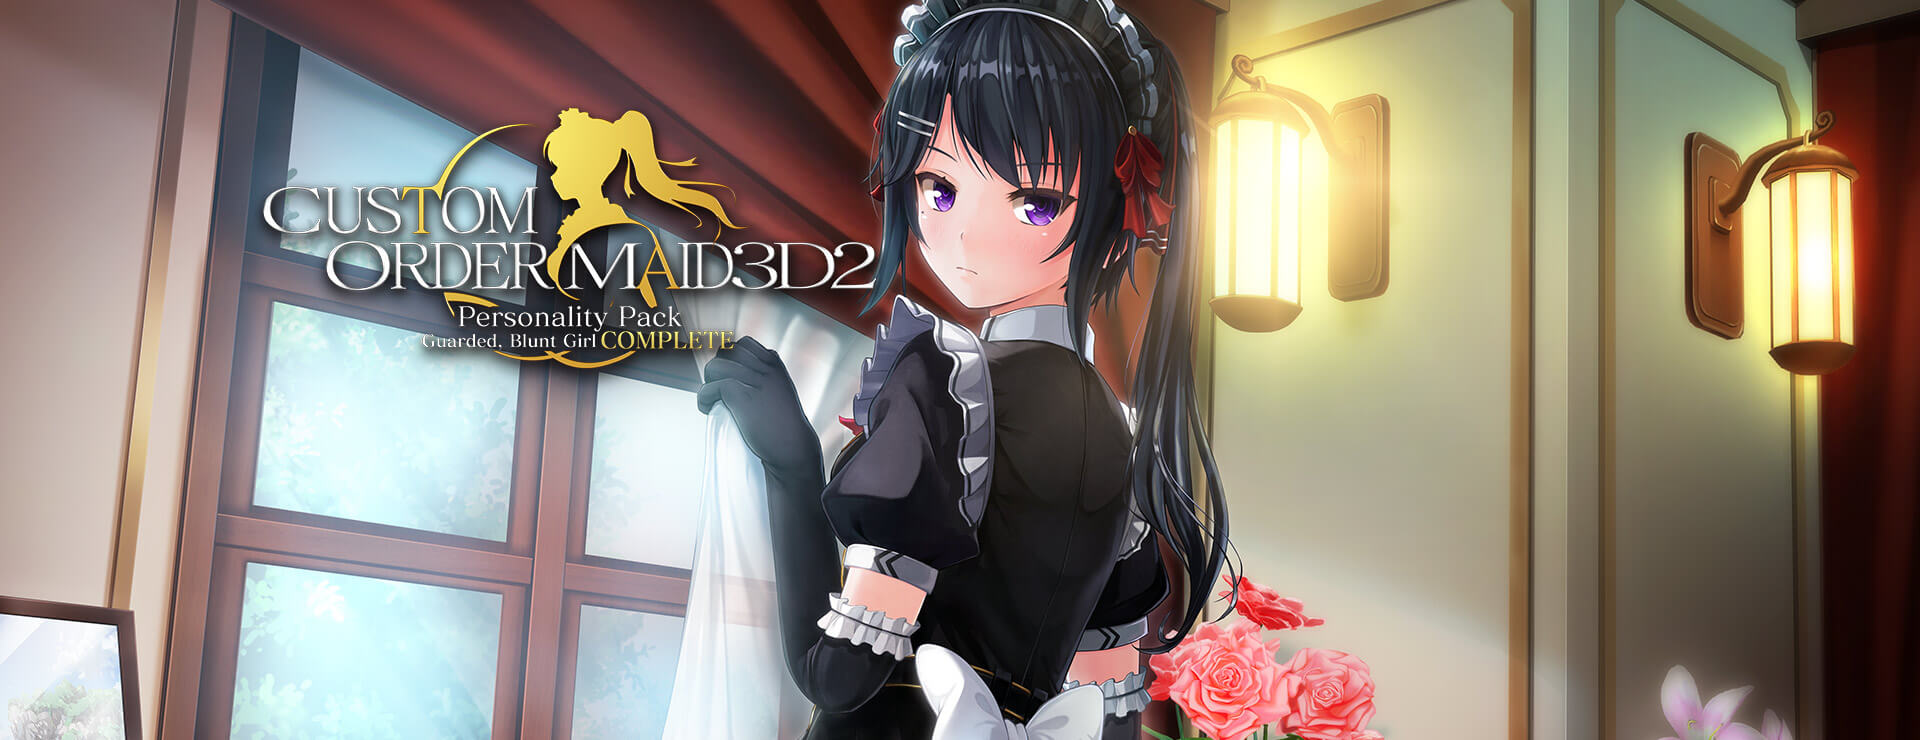 Custom Order Maid 3D2 Guarded, Blunt Girl Complete Bundle - シミュレーション ゲーム